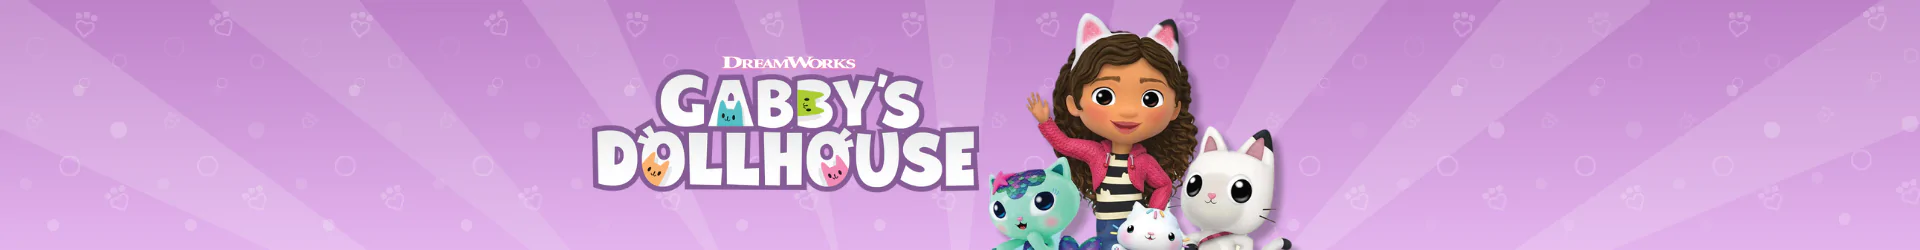 Gabbys Dollhouse puzzles banner